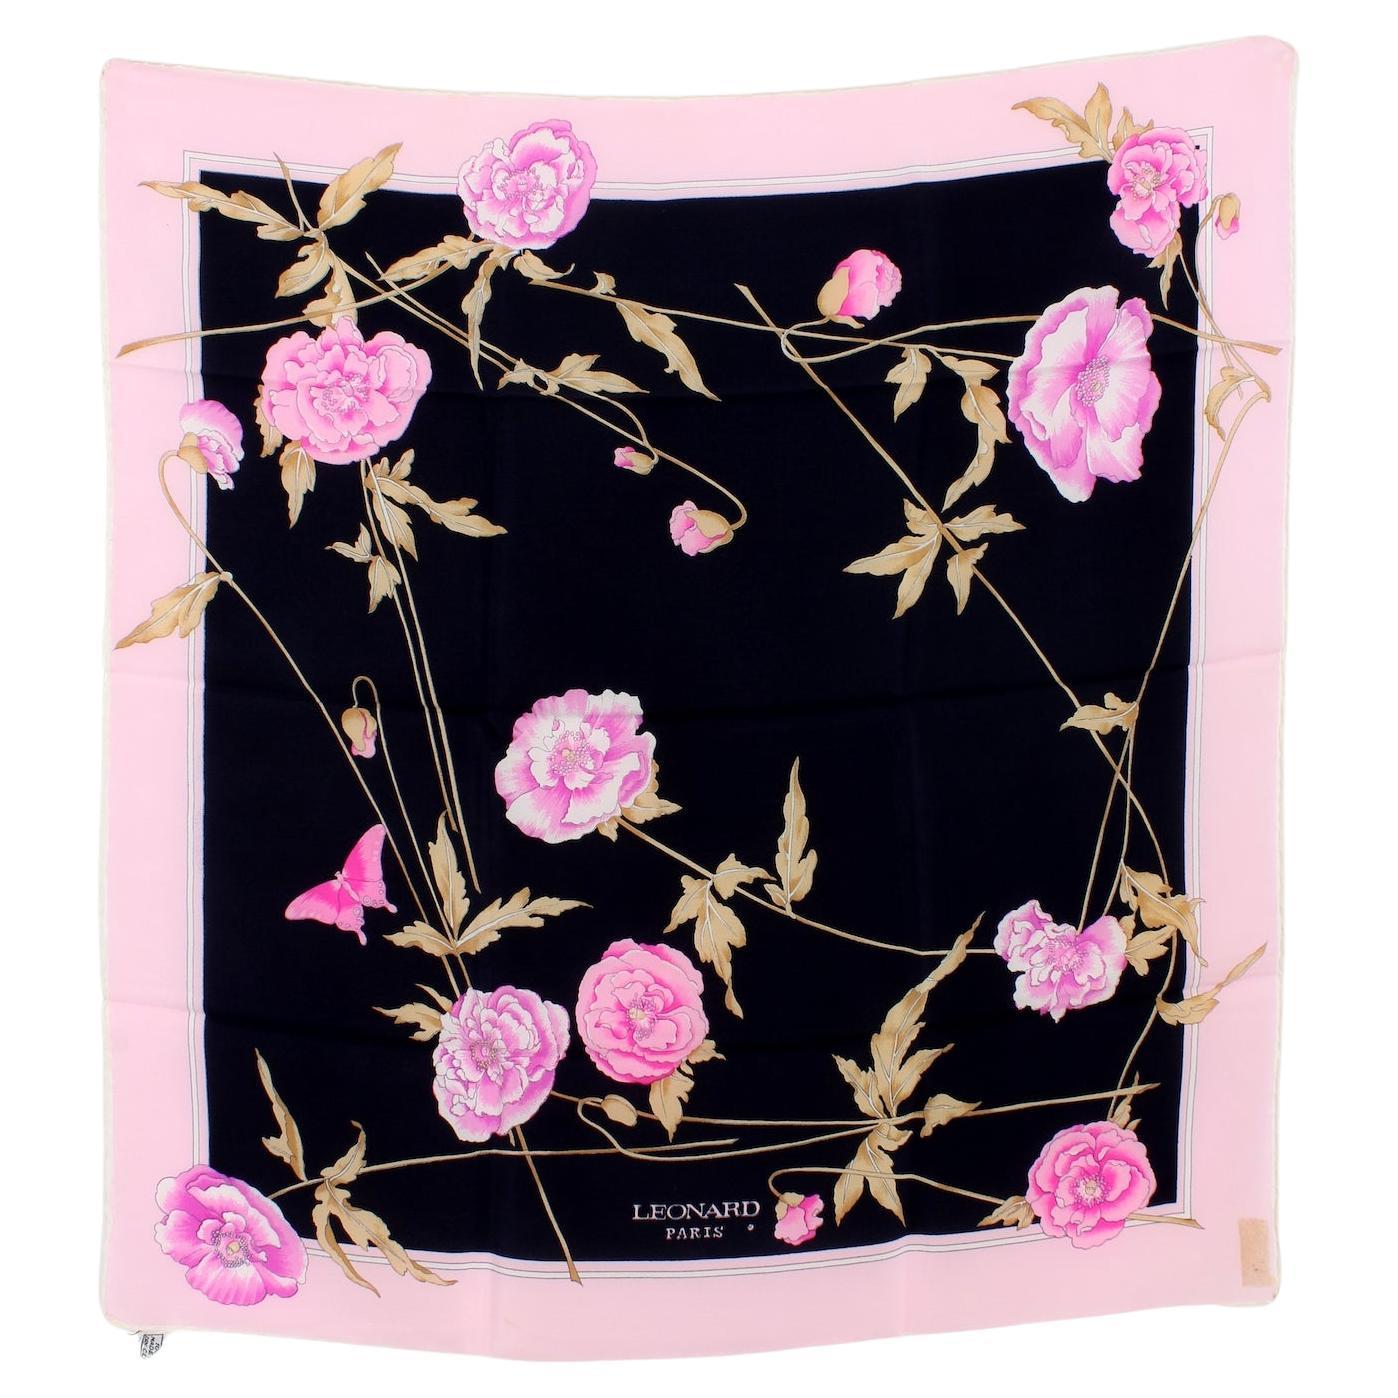 Leonard Paris Scarf Pink Black Flowers Silk Vintage 80s For Sale